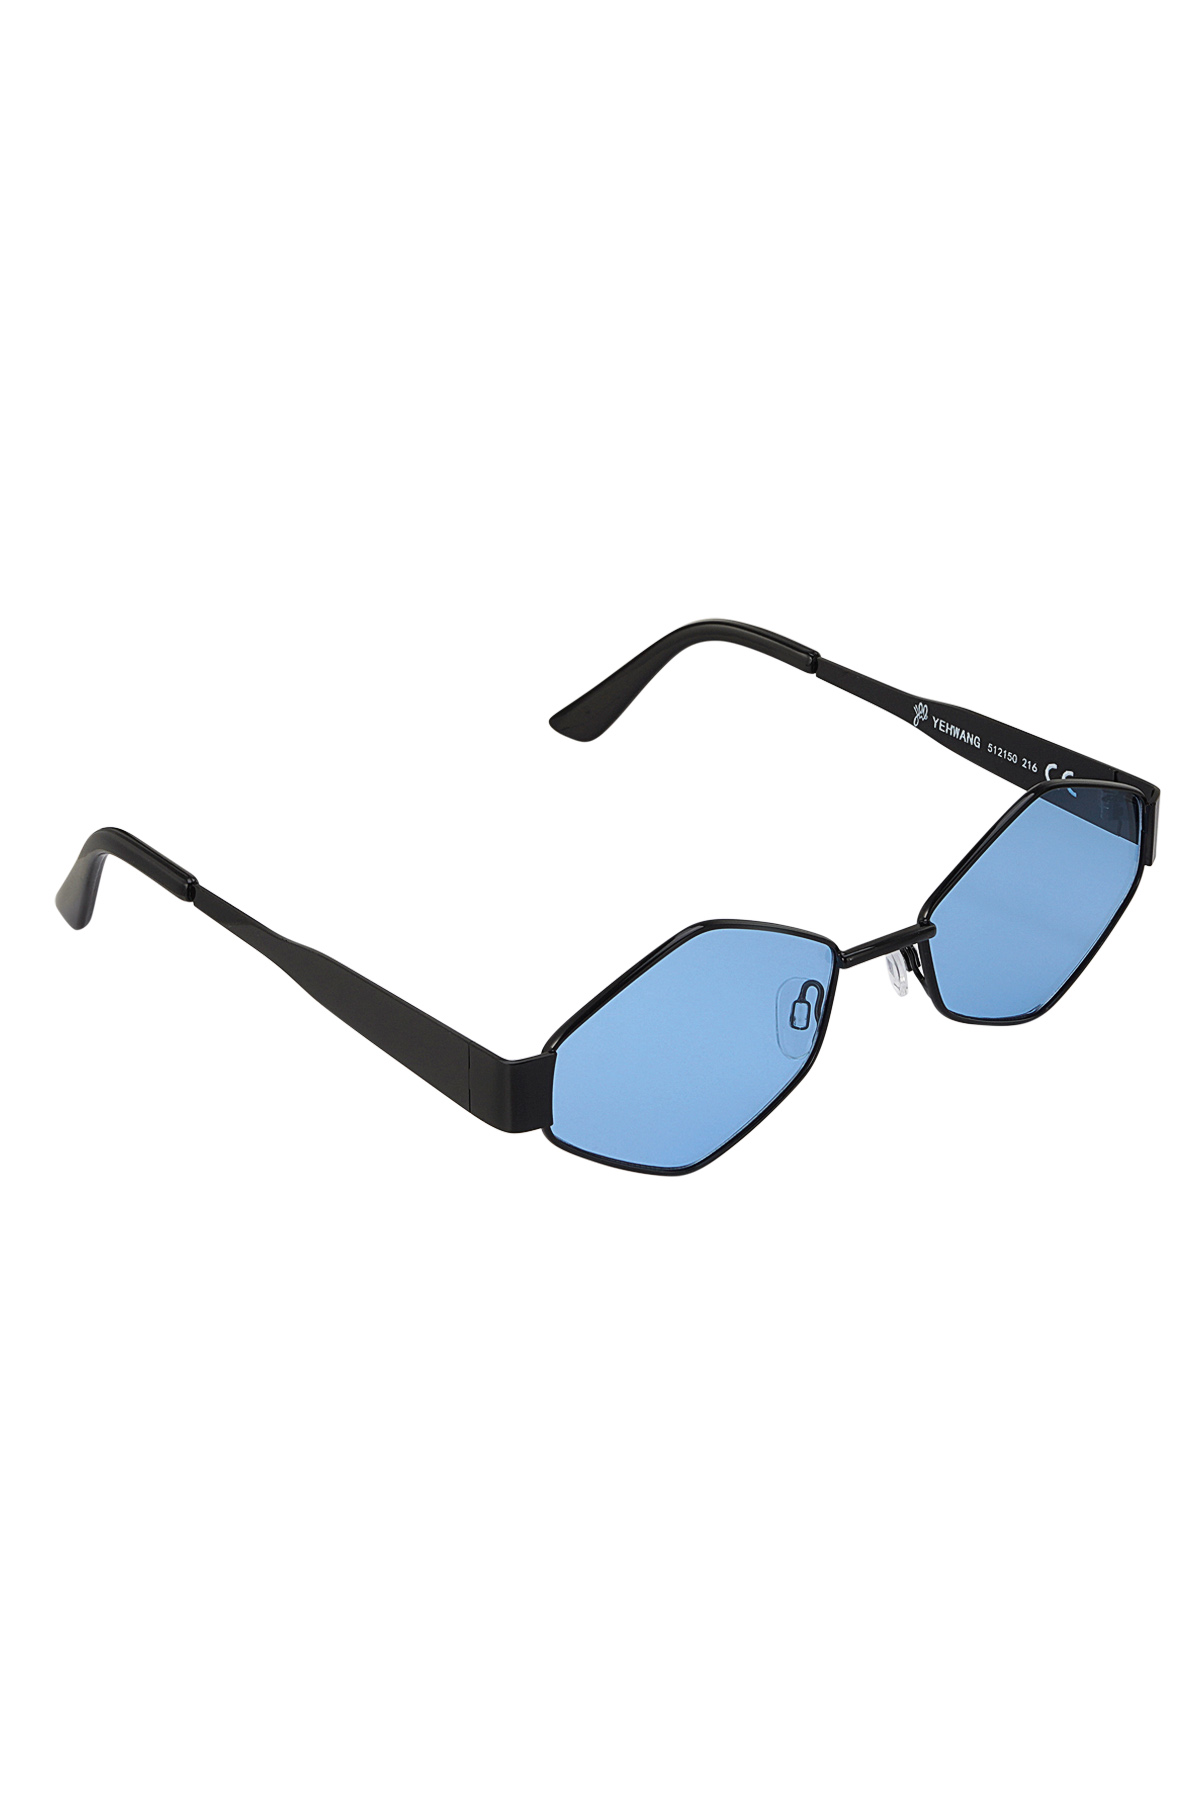 Sunglasses all night long - blue